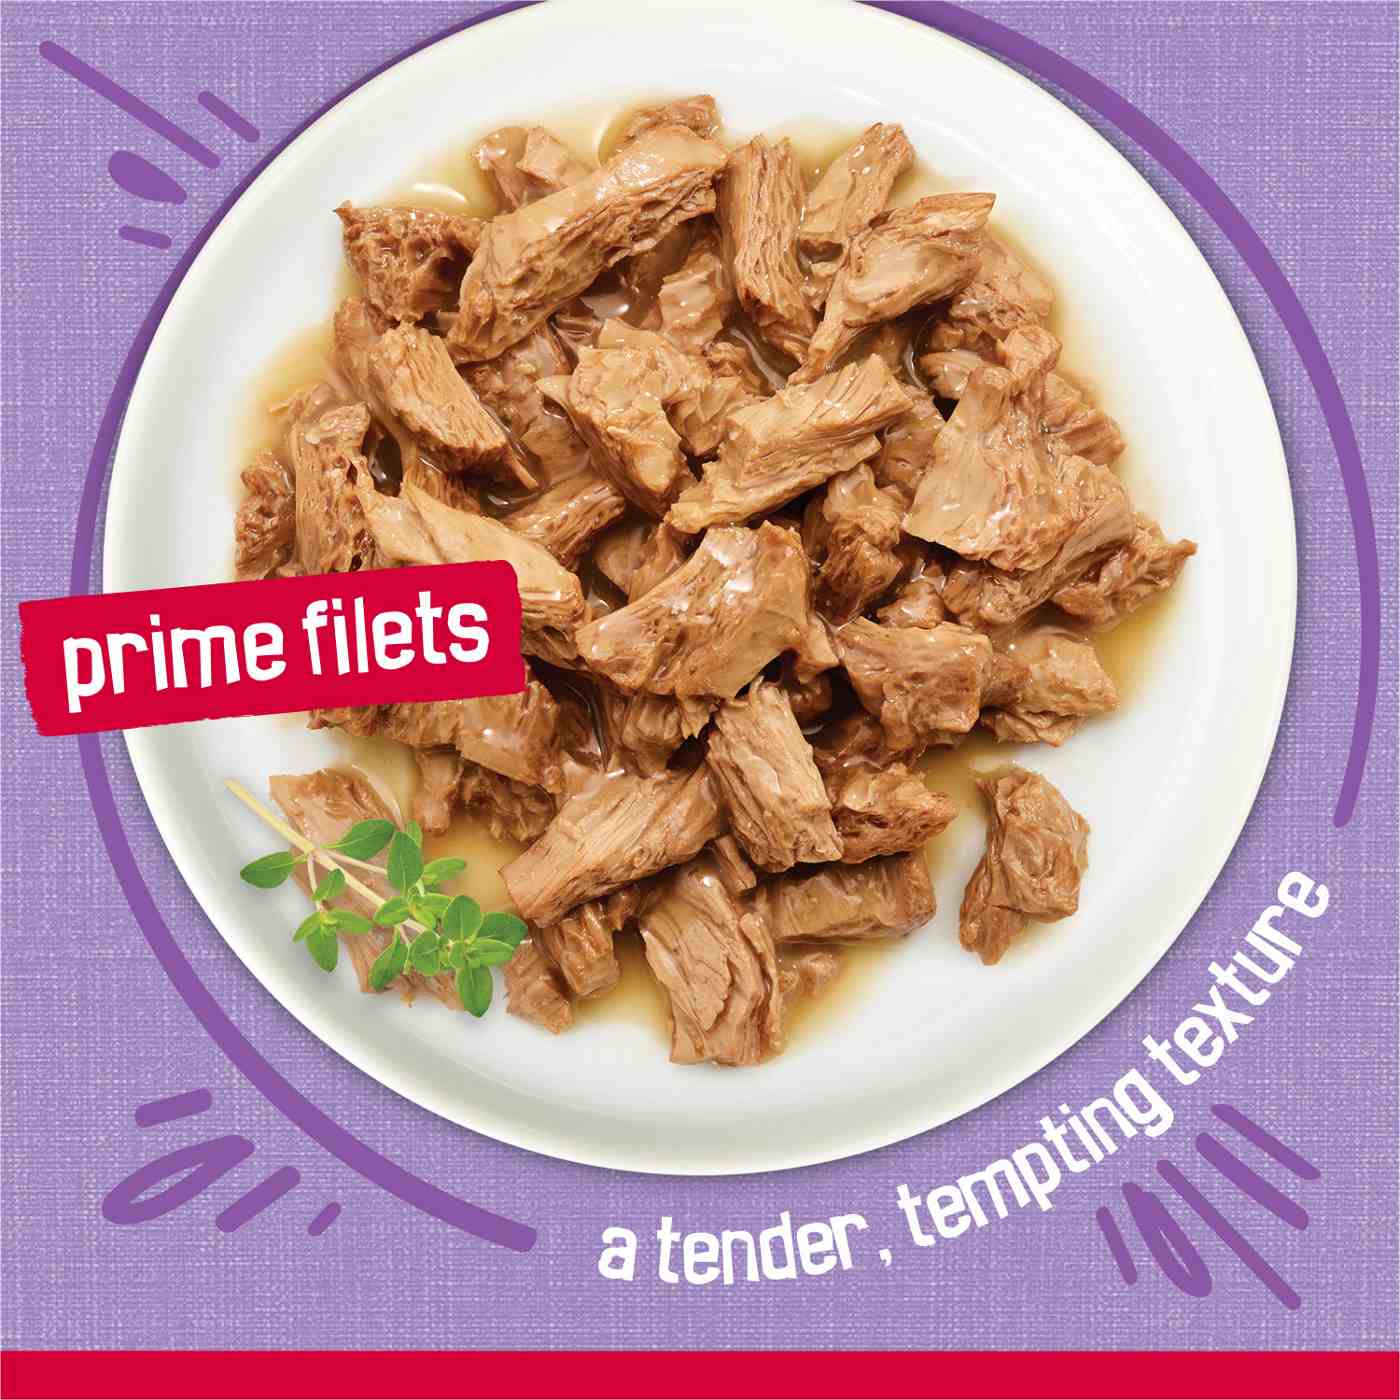 Friskies Purina Friskies Gravy Wet Cat Food, Prime Filets Turkey Dinner; image 8 of 9